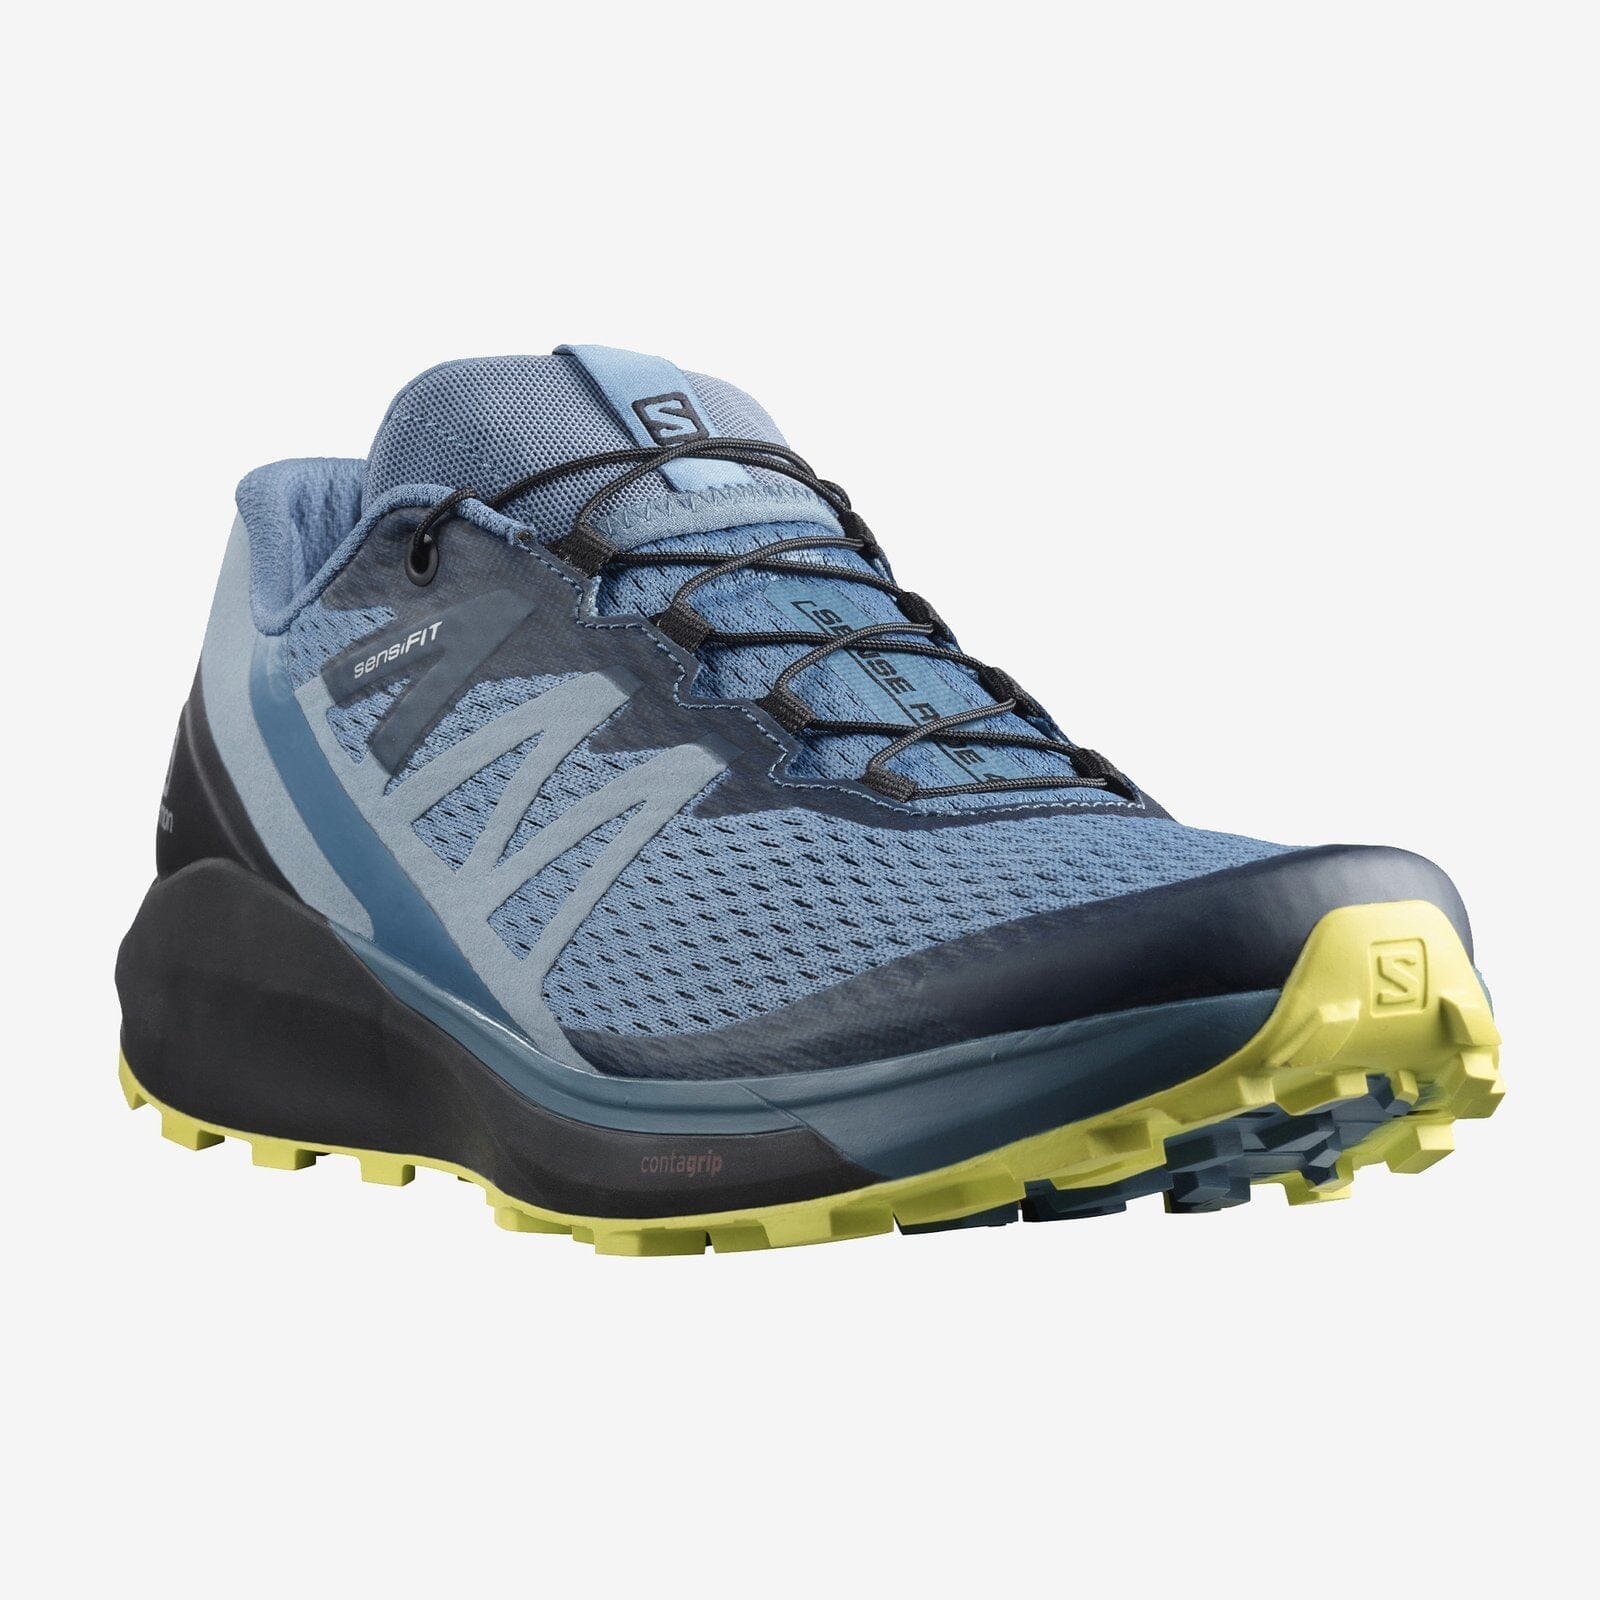 Salomon Sense Ride 4 Men's Trail Running Shoes -